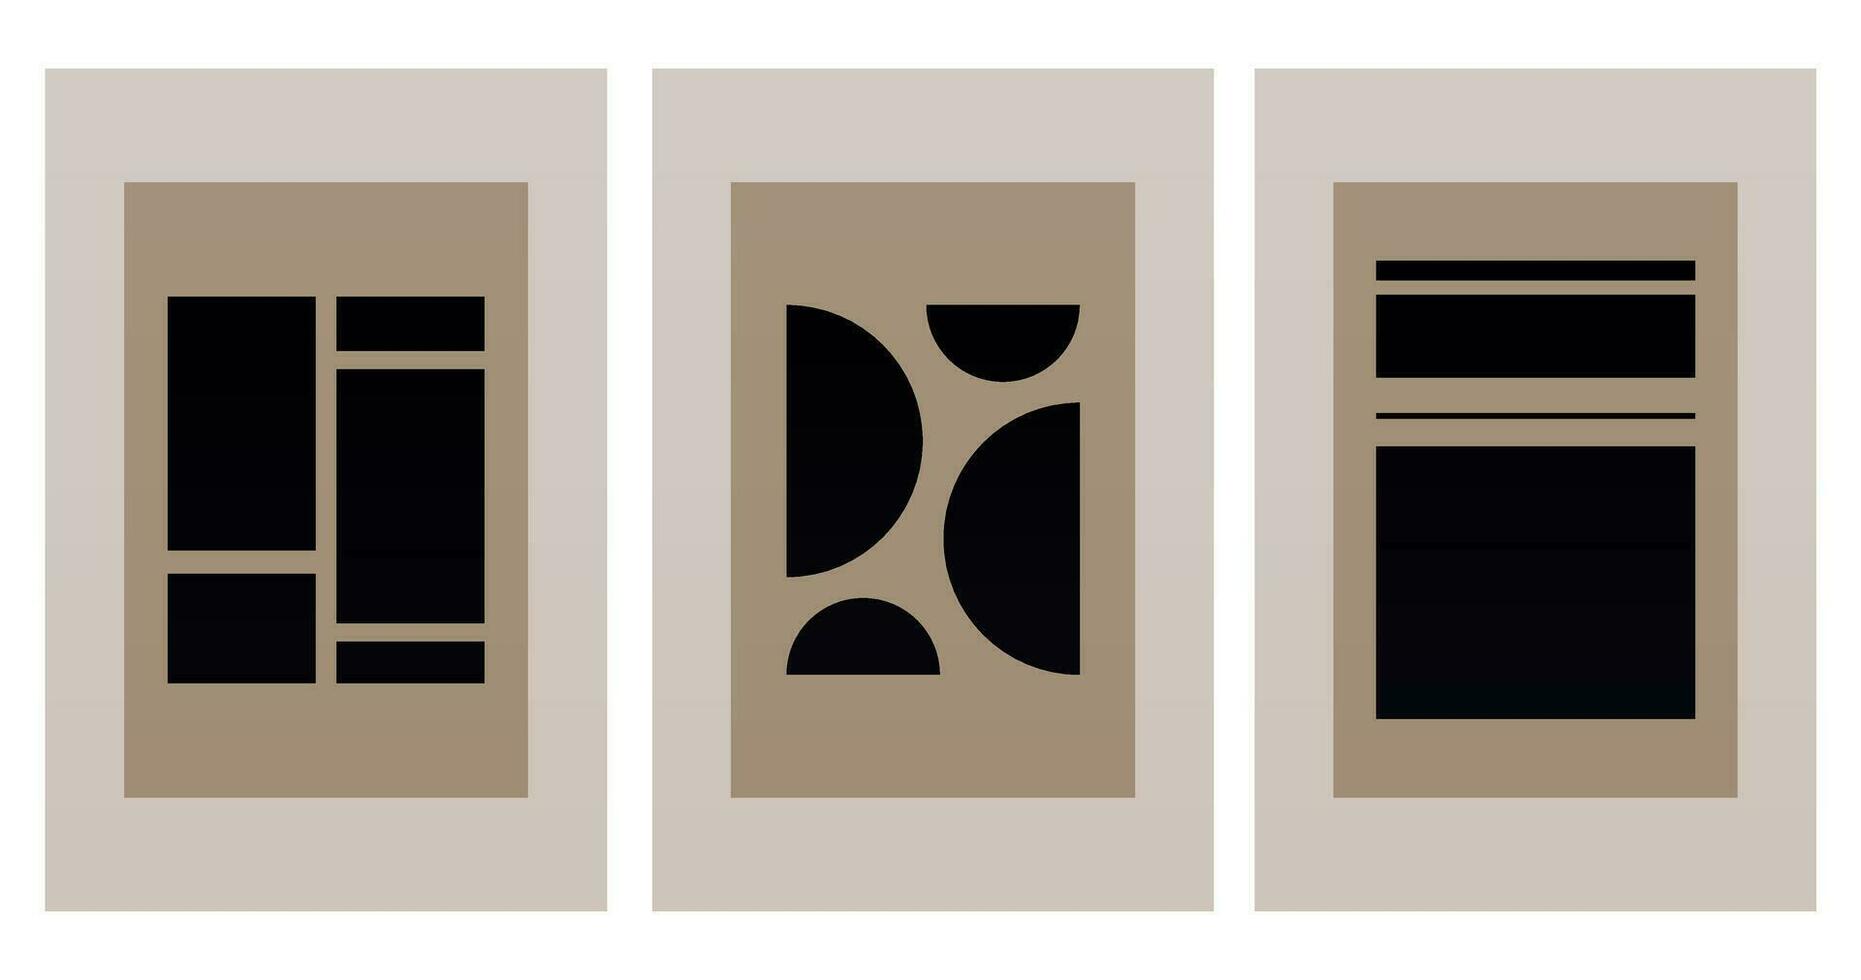 minimalista moderno japandi neutral escandinavo pared Arte vector